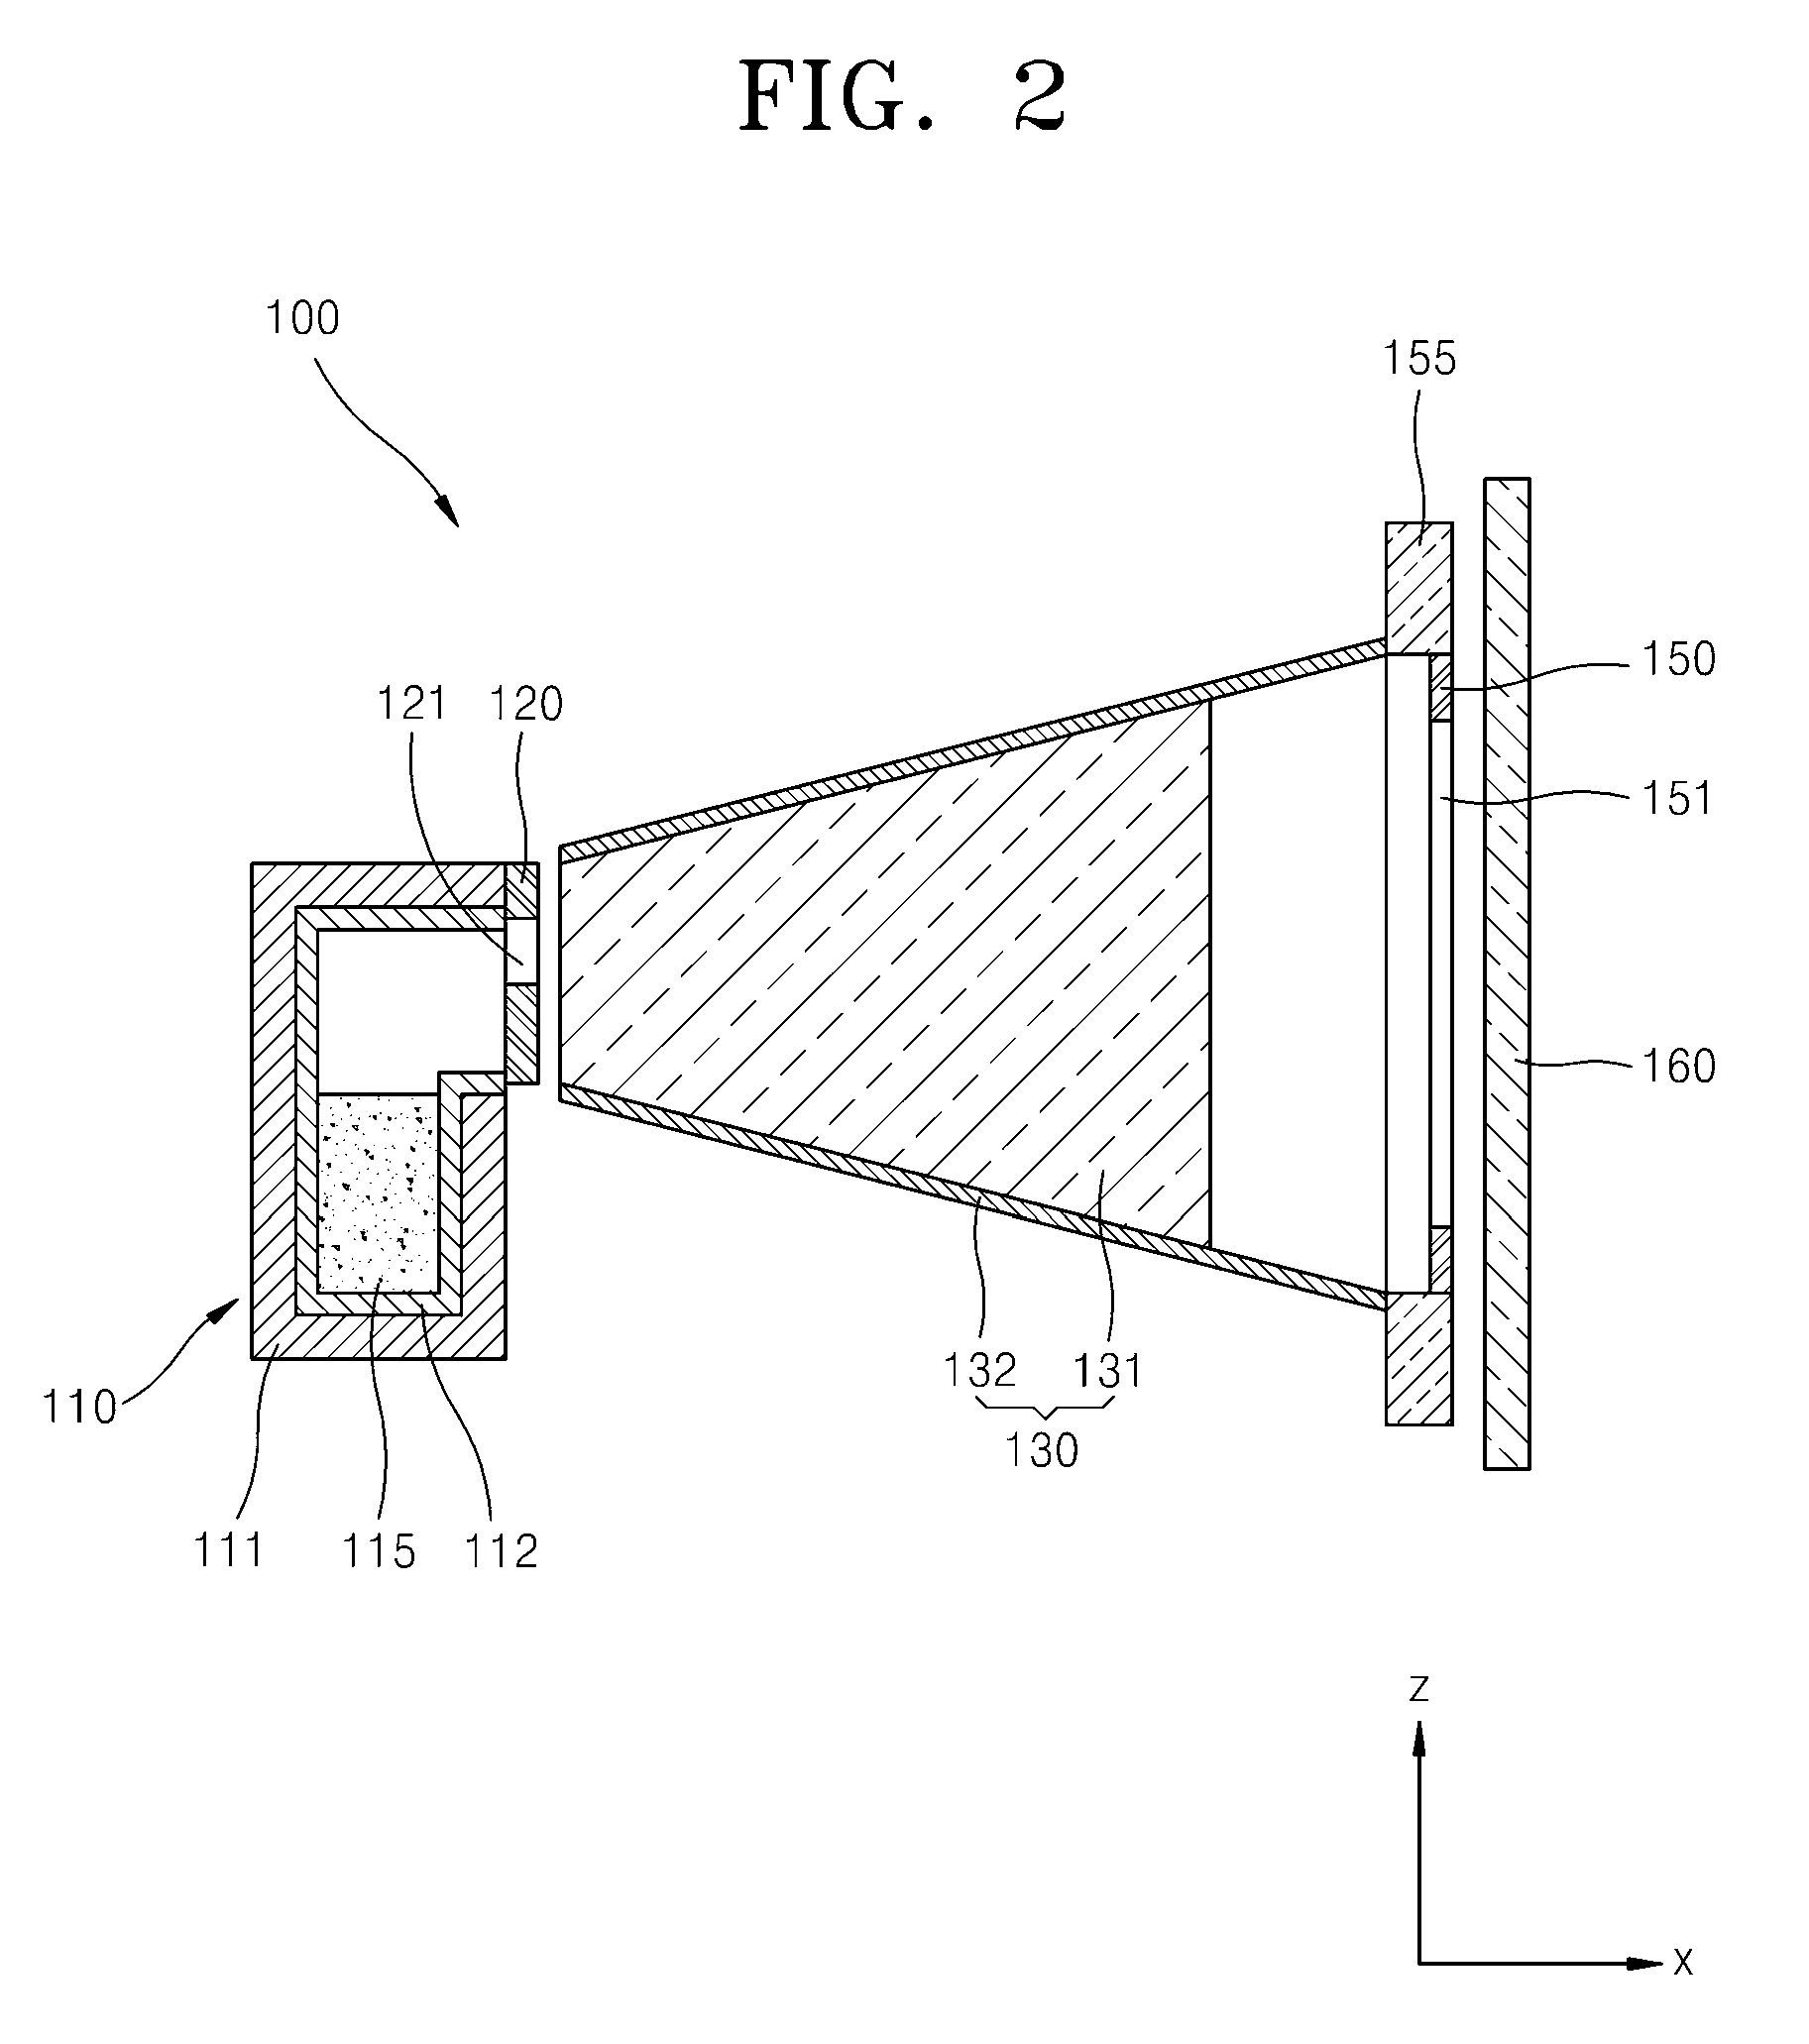 Thin film deposition apparatus